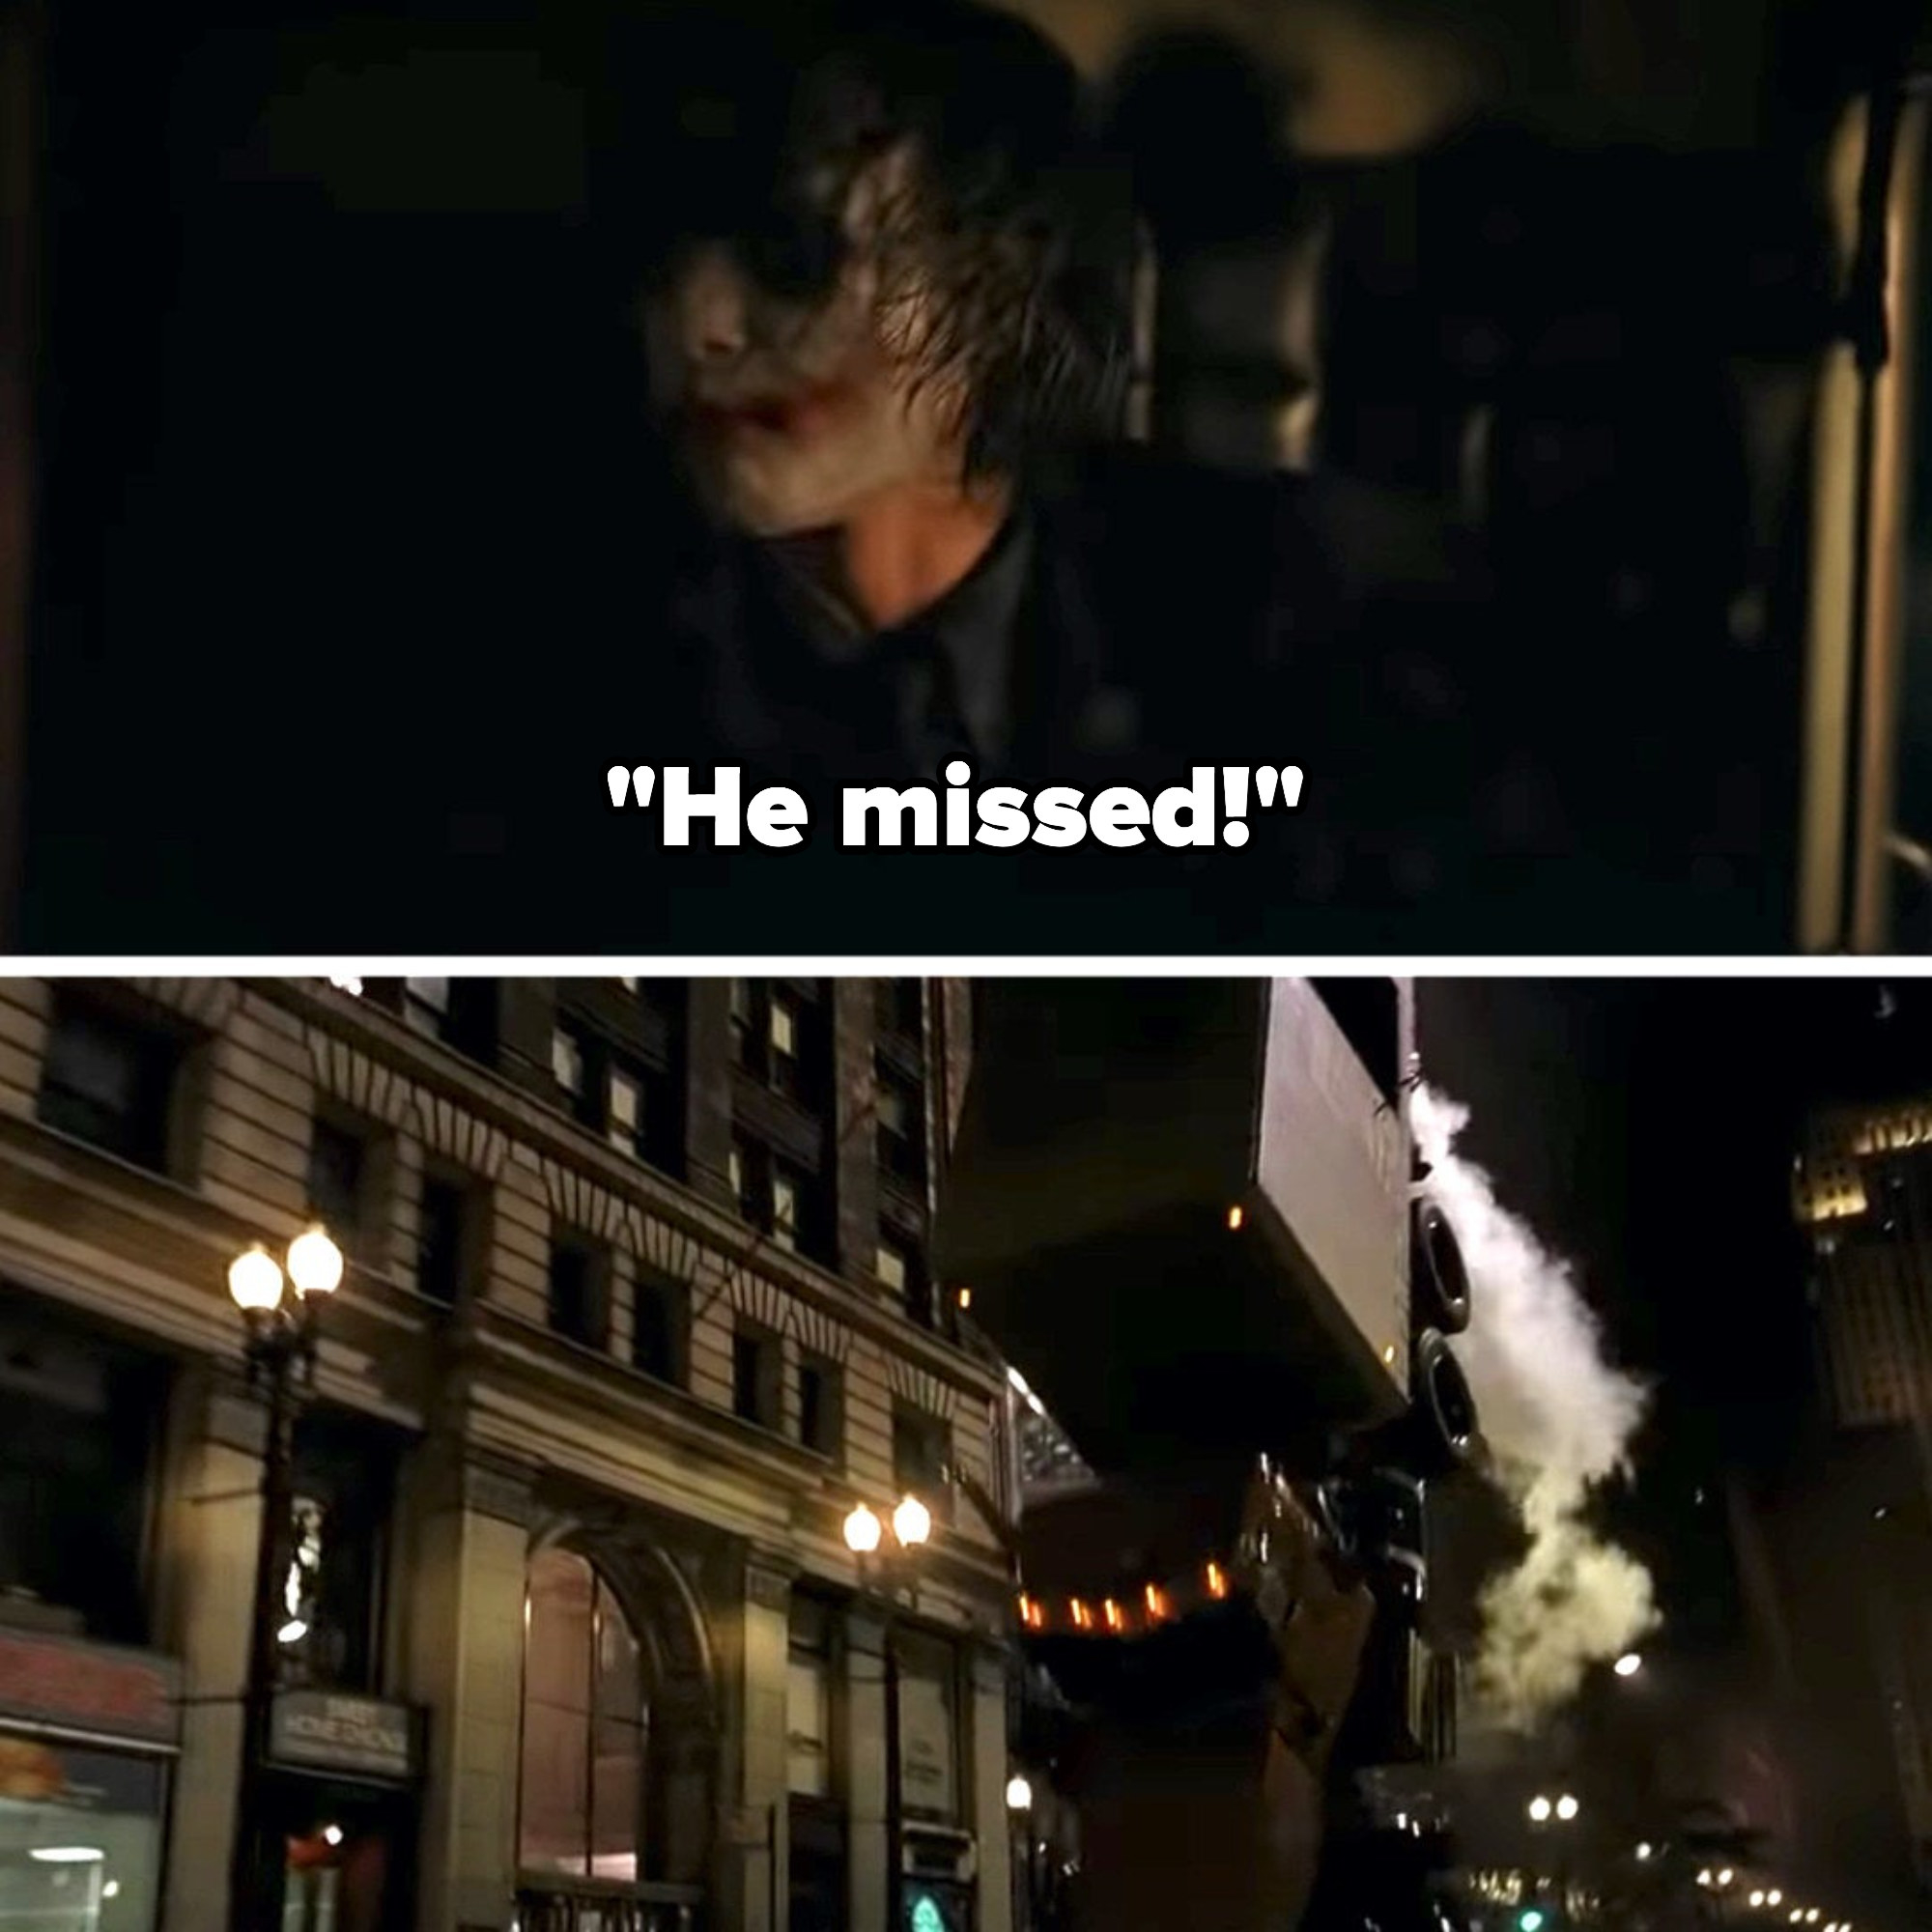 Joker says he missed, but then his truck flips